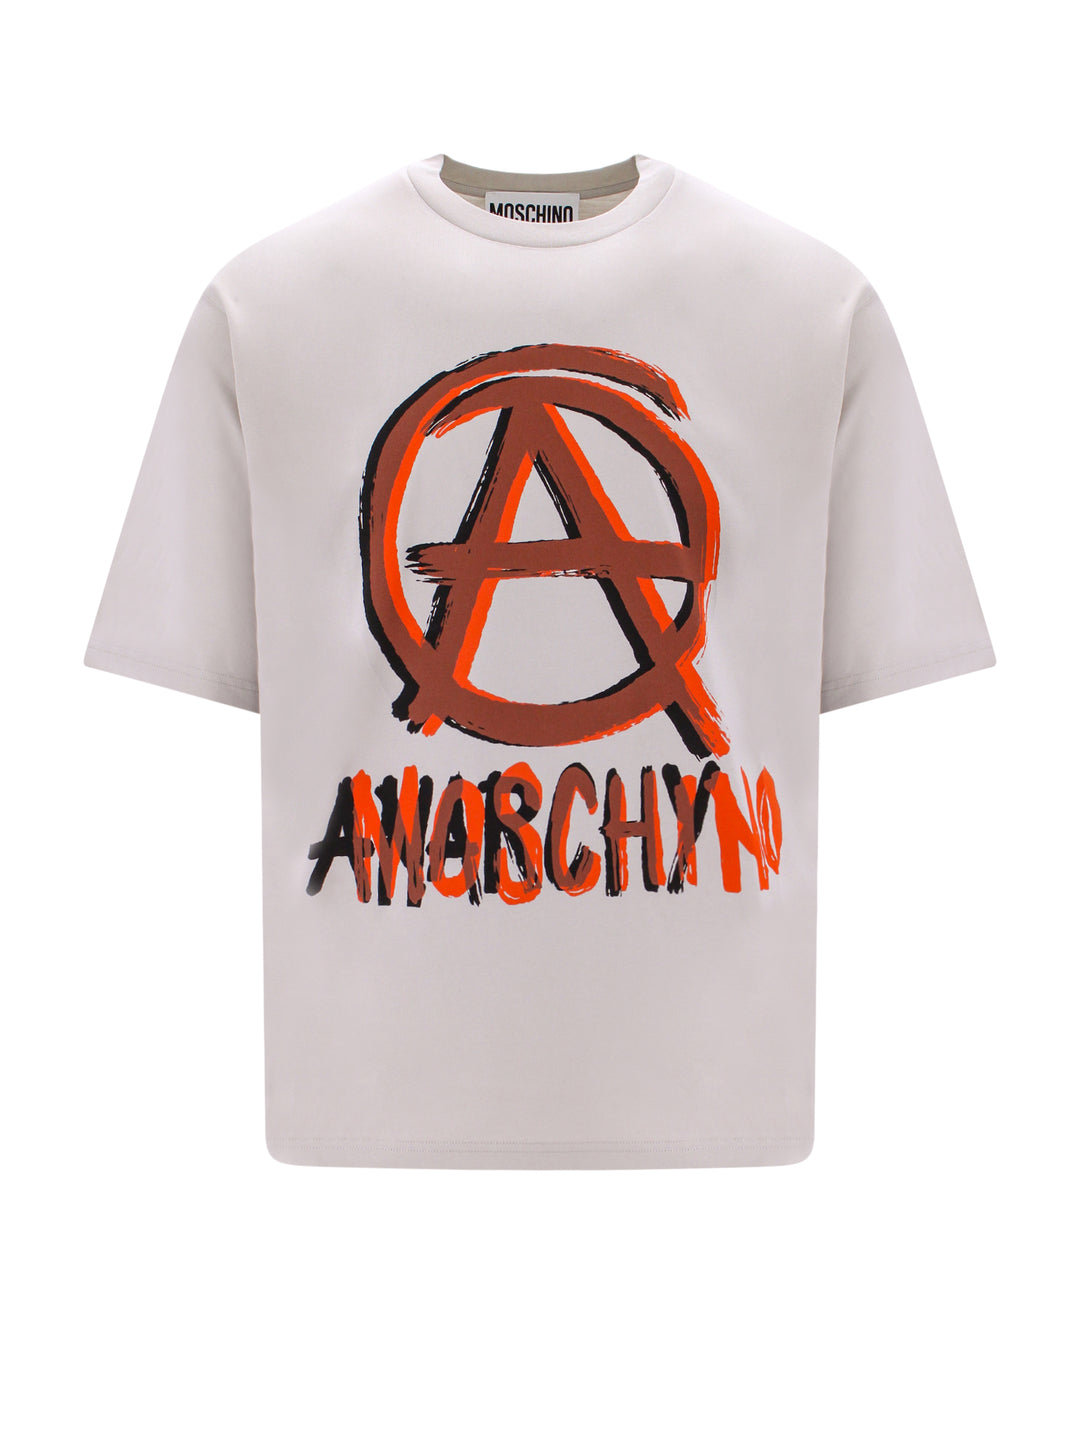 T-shirt in cotone organico con stampa Moschino Anarchy